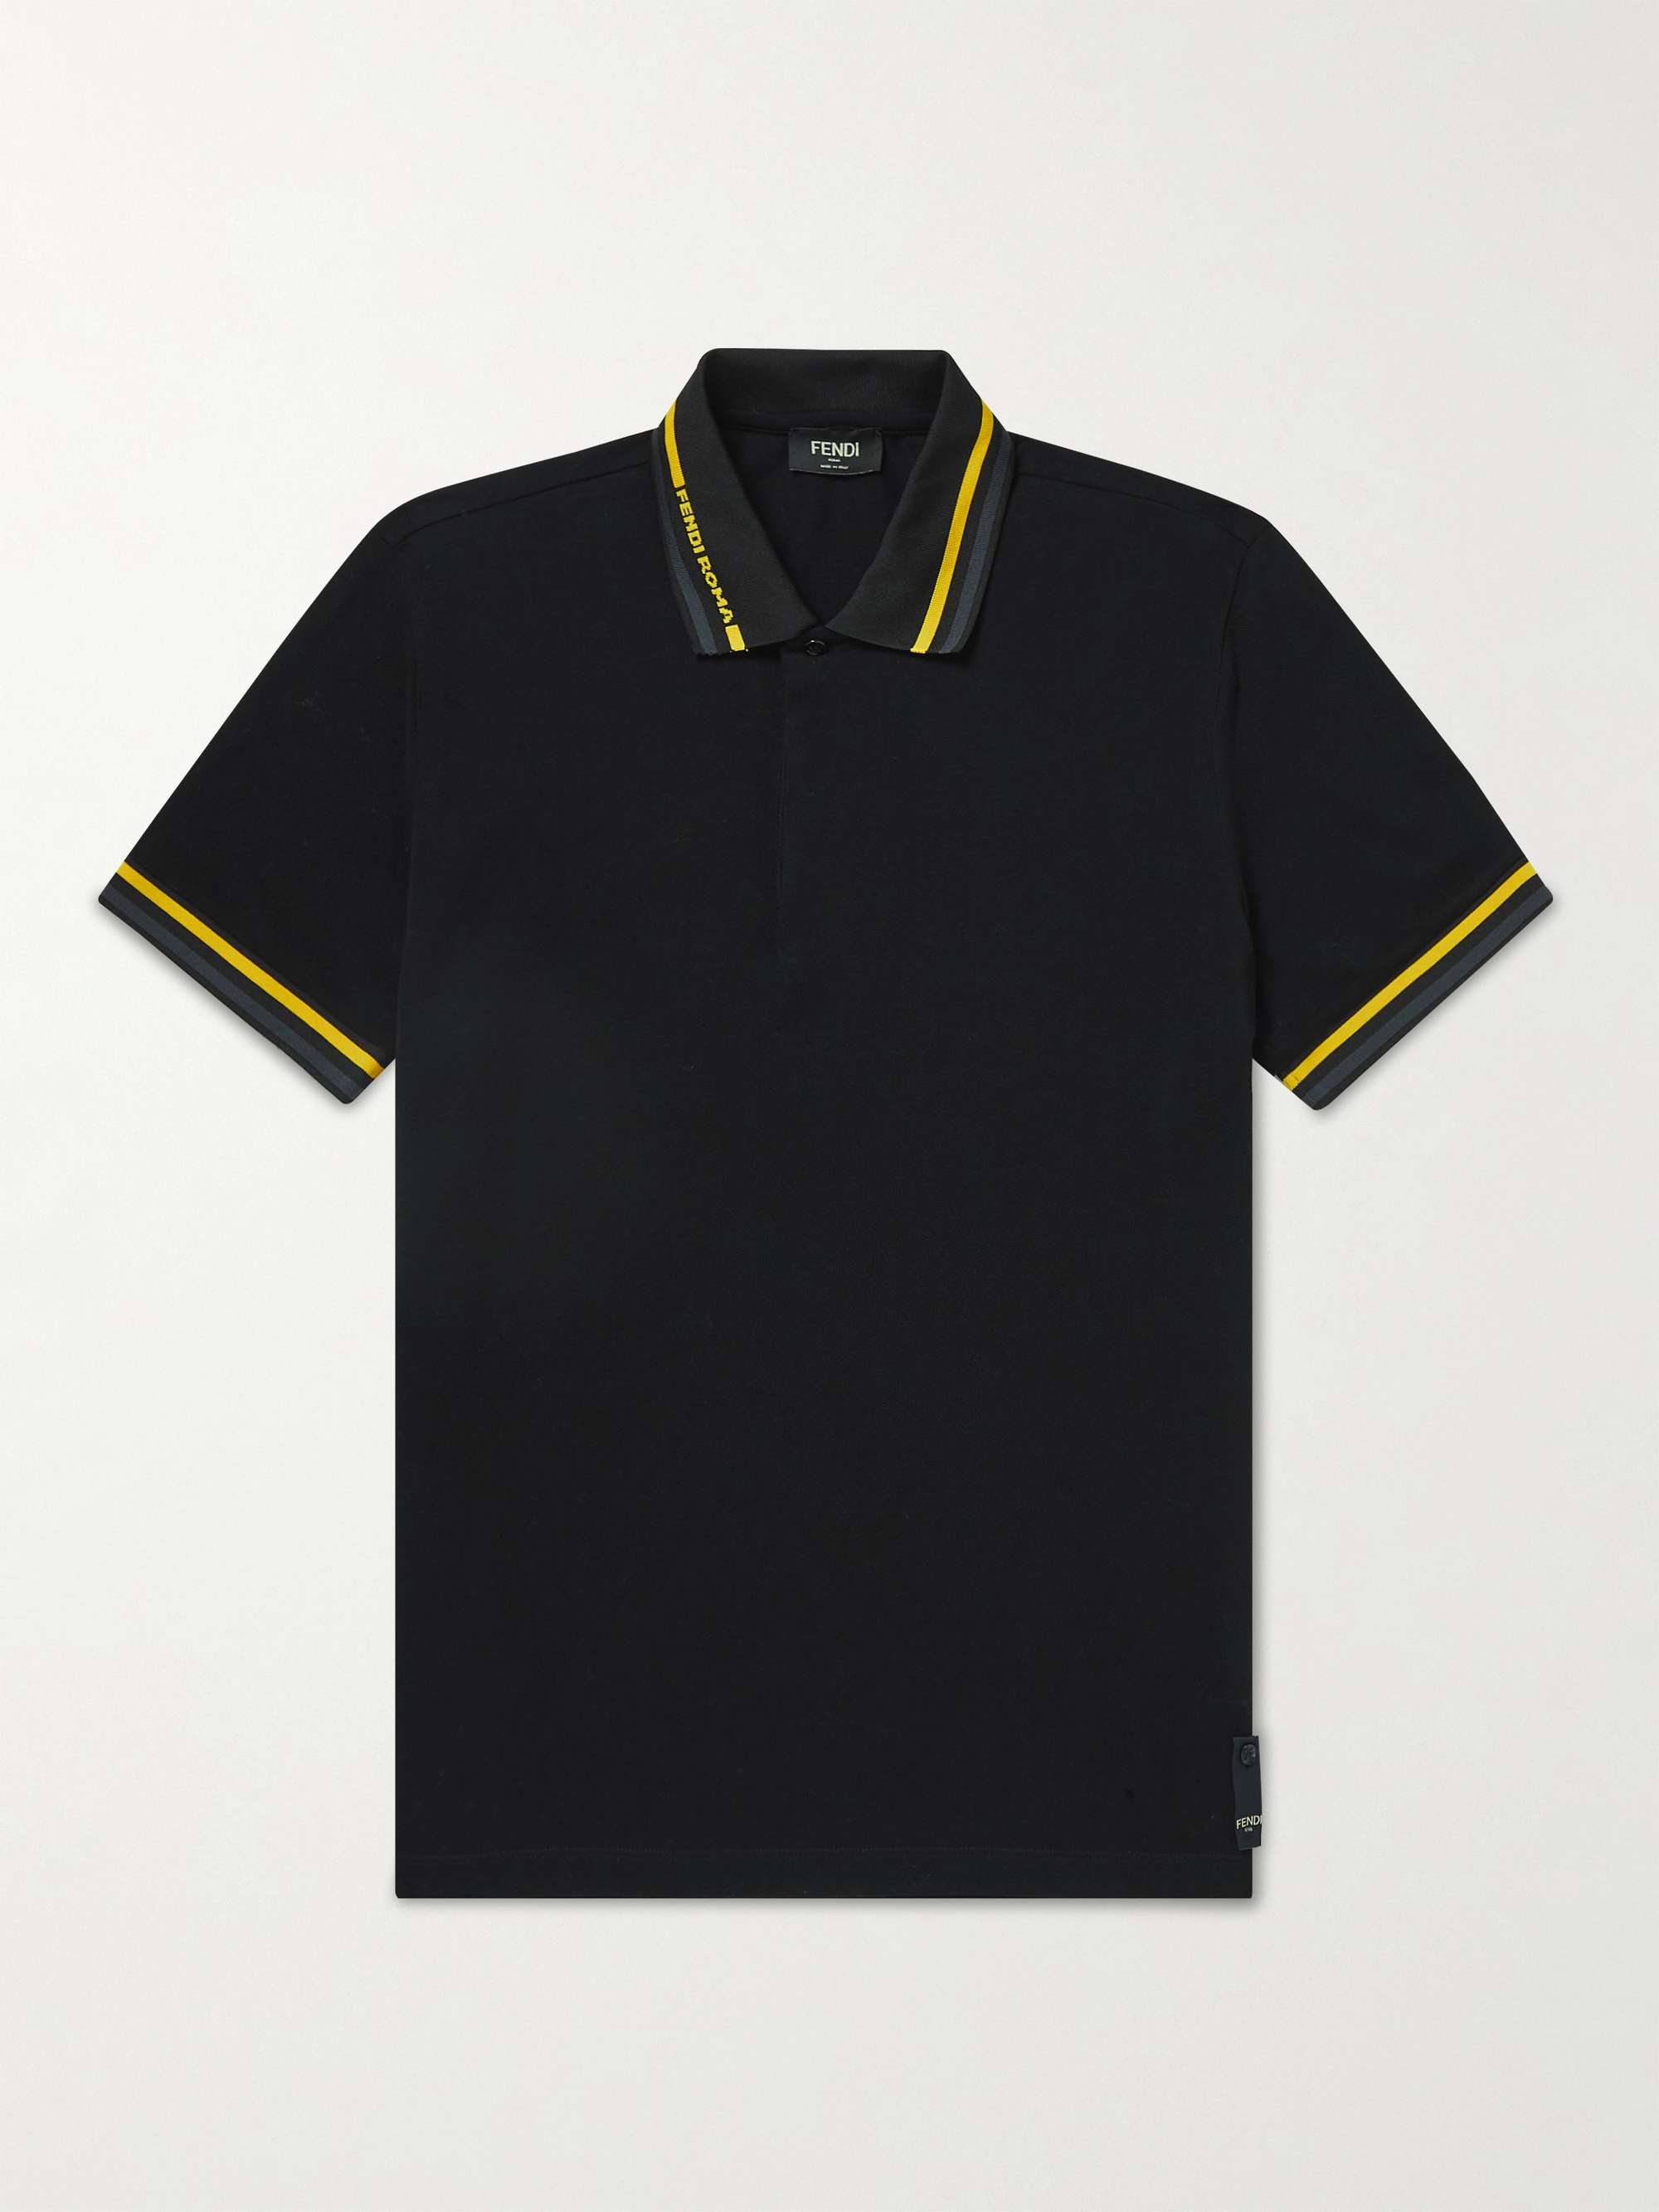 FENDI Slim-Fit Contrast-Tipped Cotton-Pique Polo Shirt